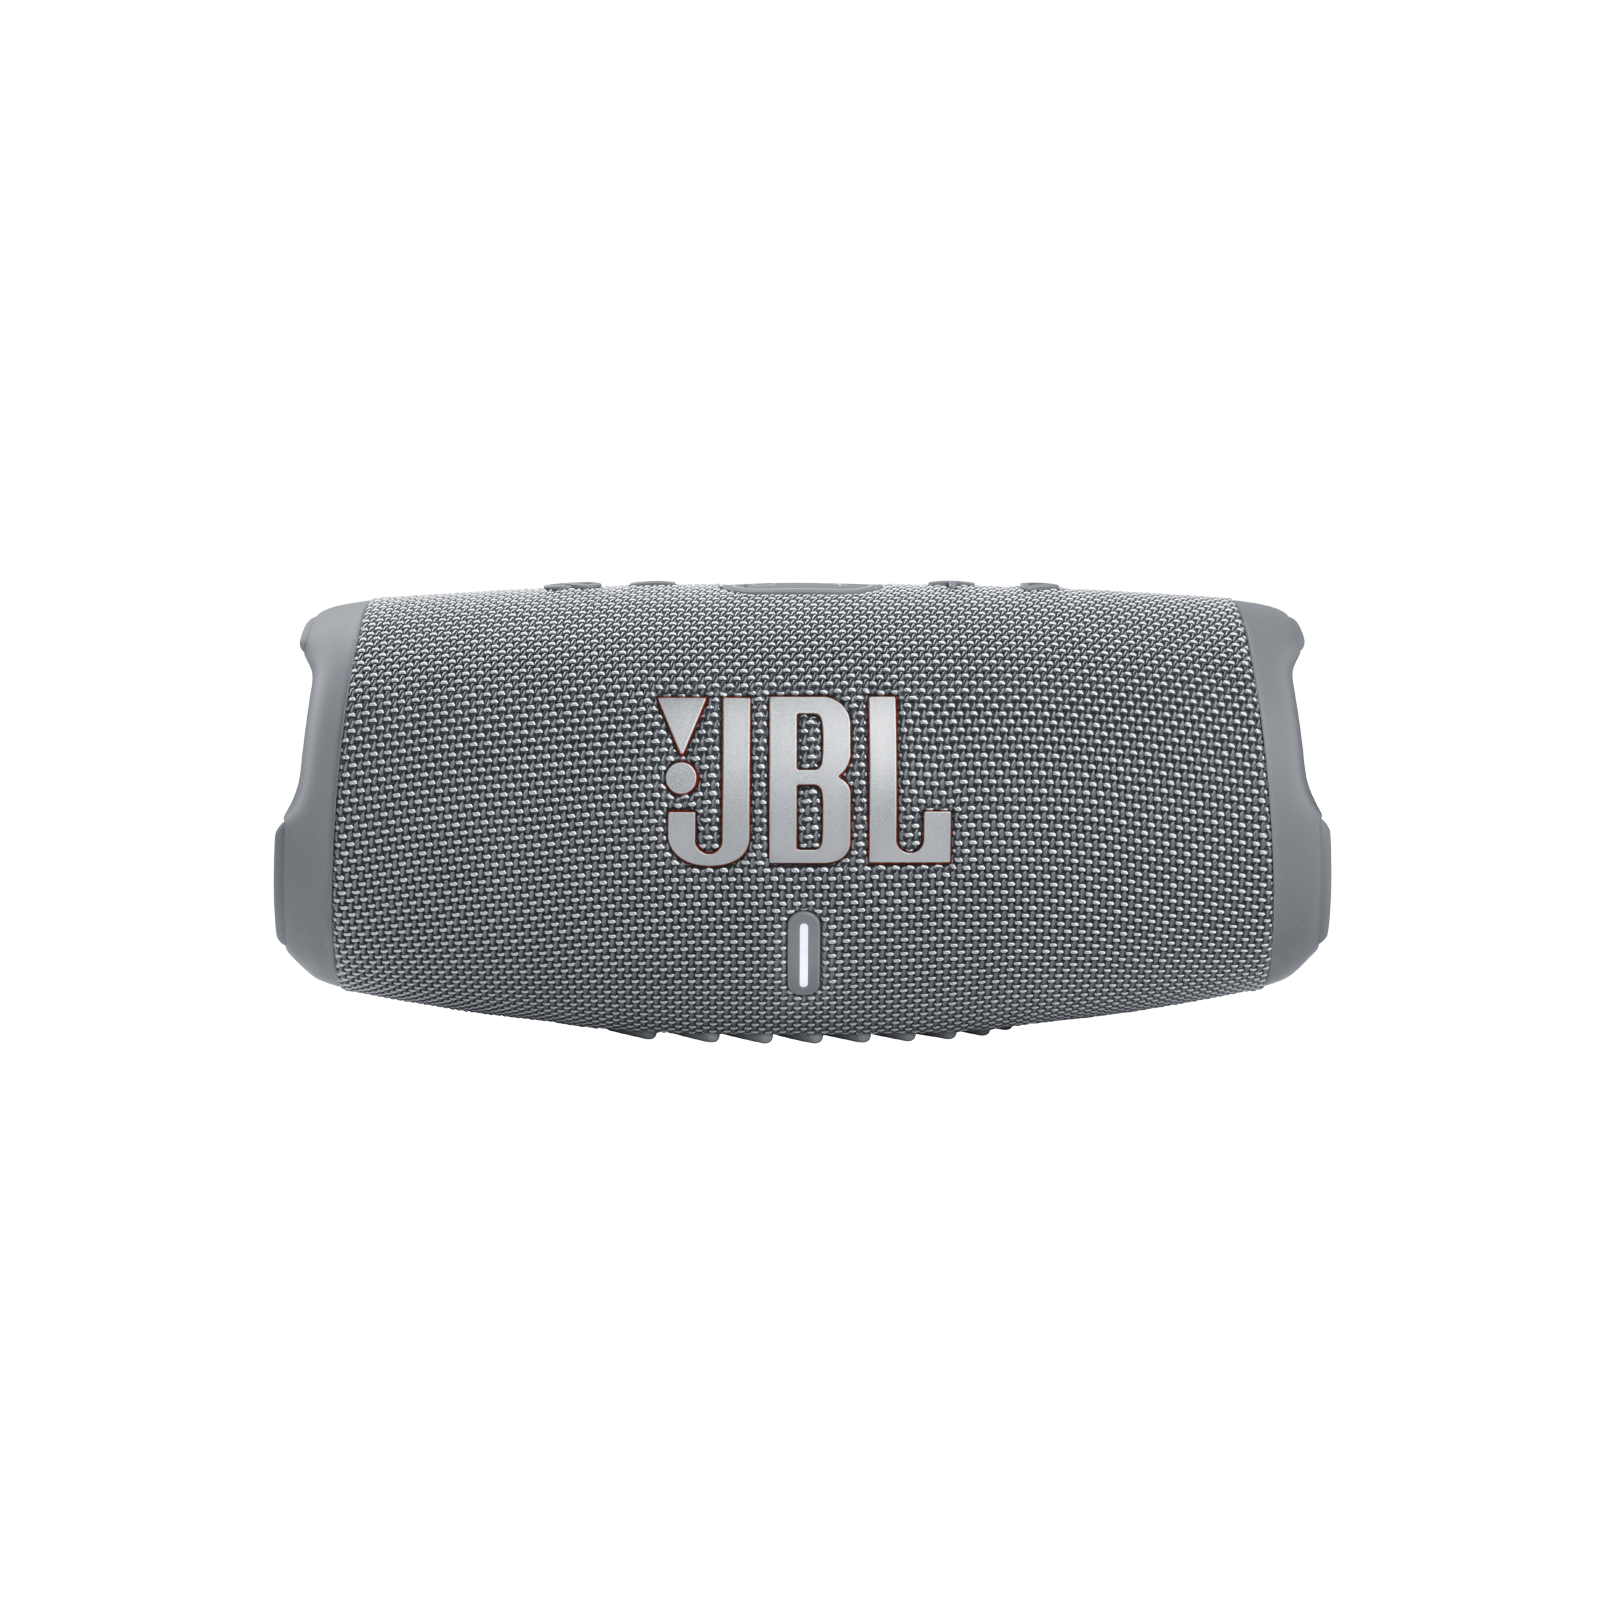 JBL Charge 5 - Grey - Portable Waterproof Speaker with Powerbank - Front